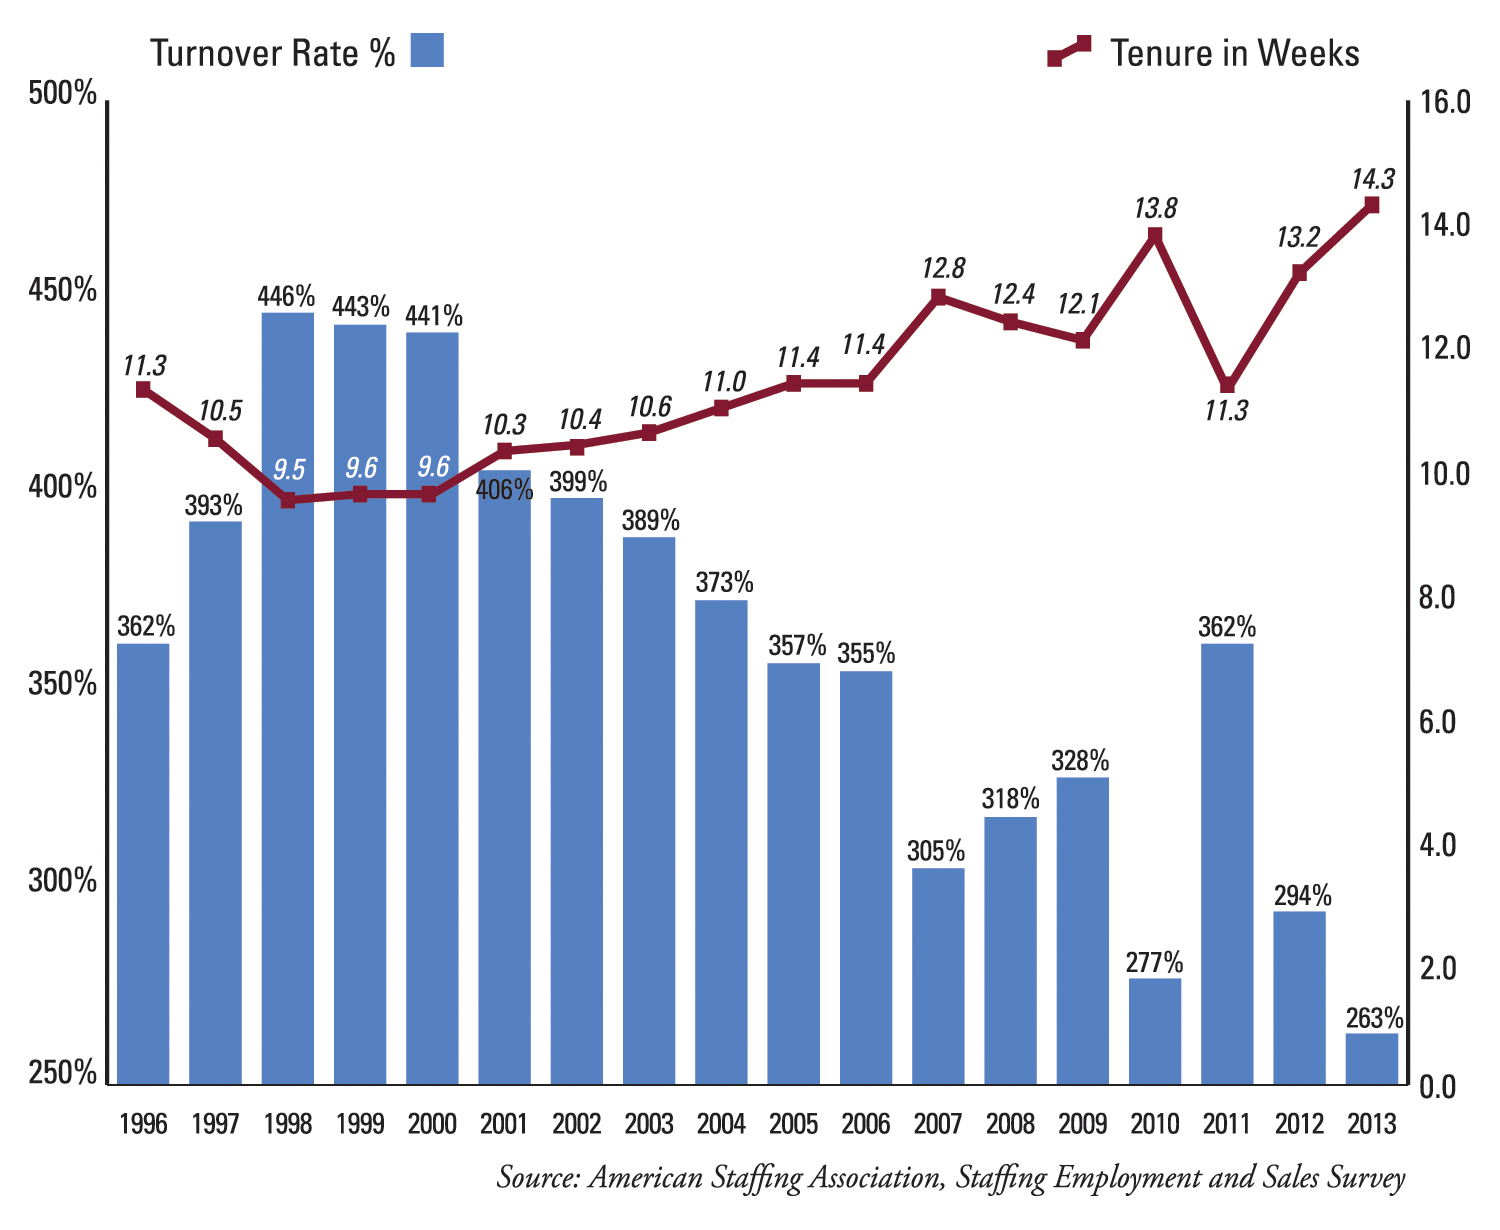 Turnover Rate vs. Tenure